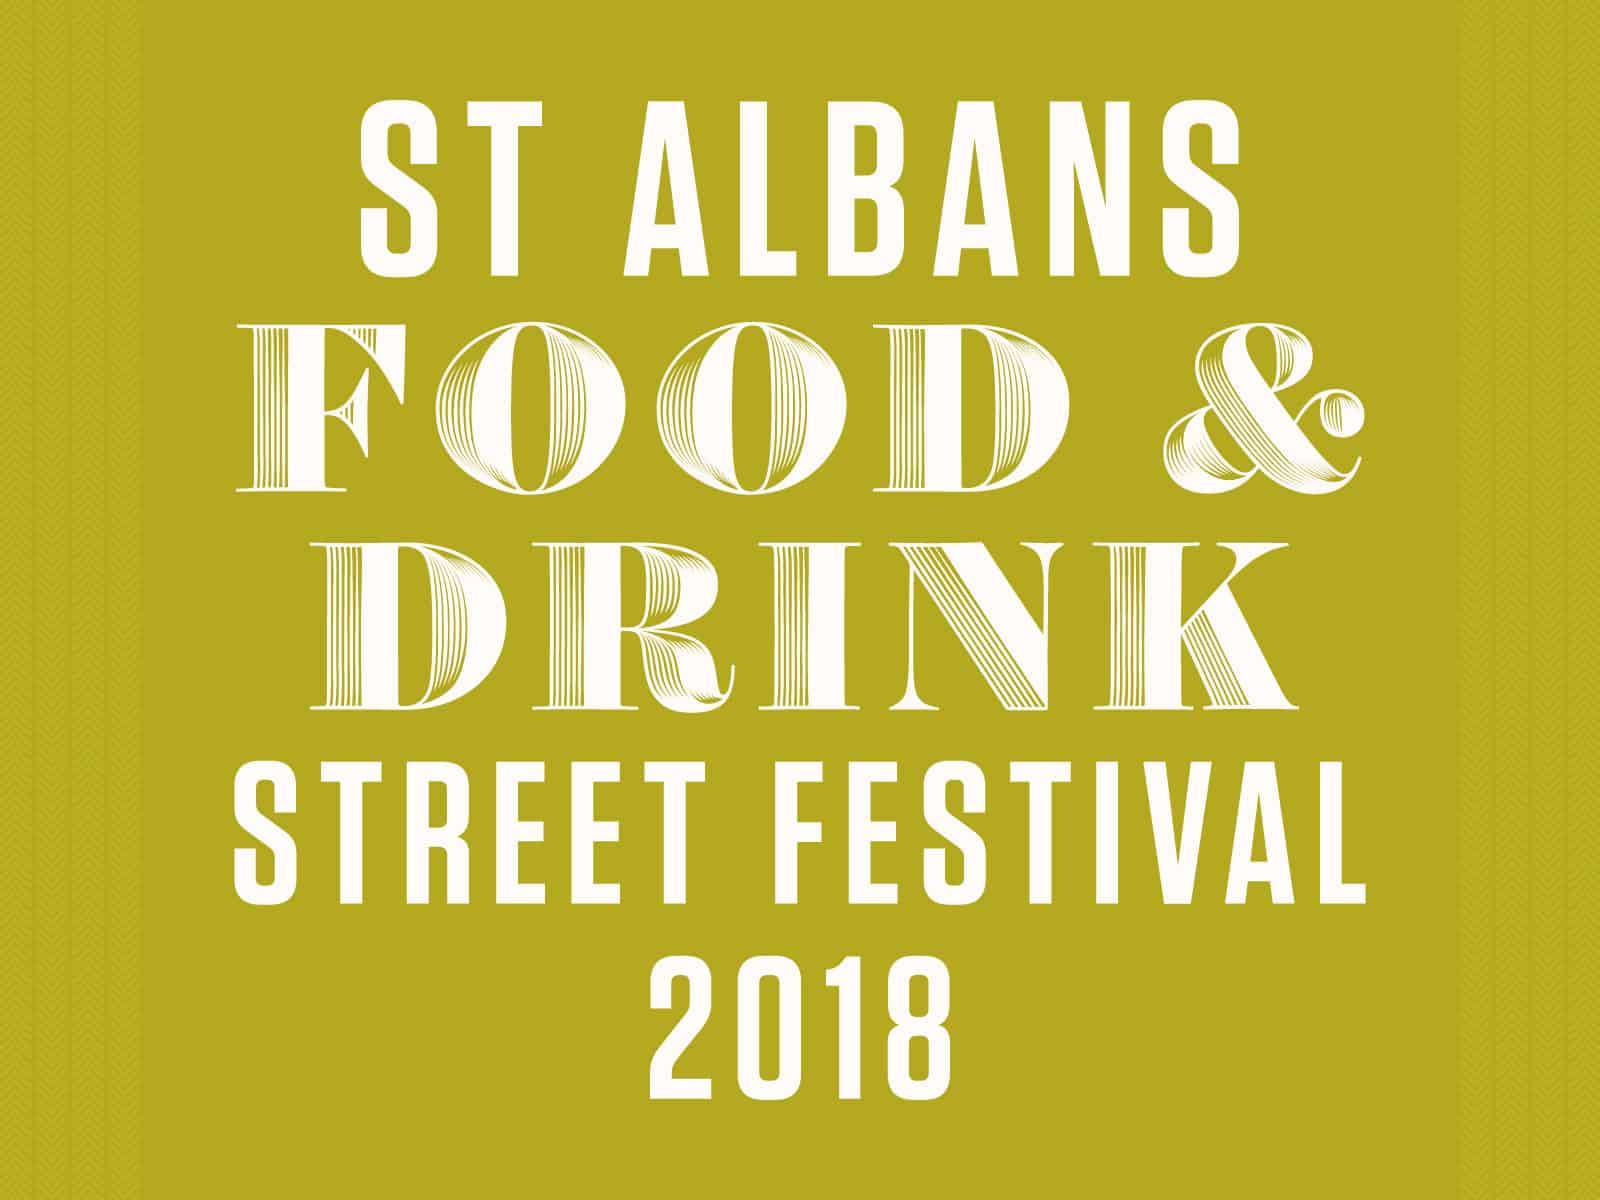 St Albans Food & Drink Festival 18